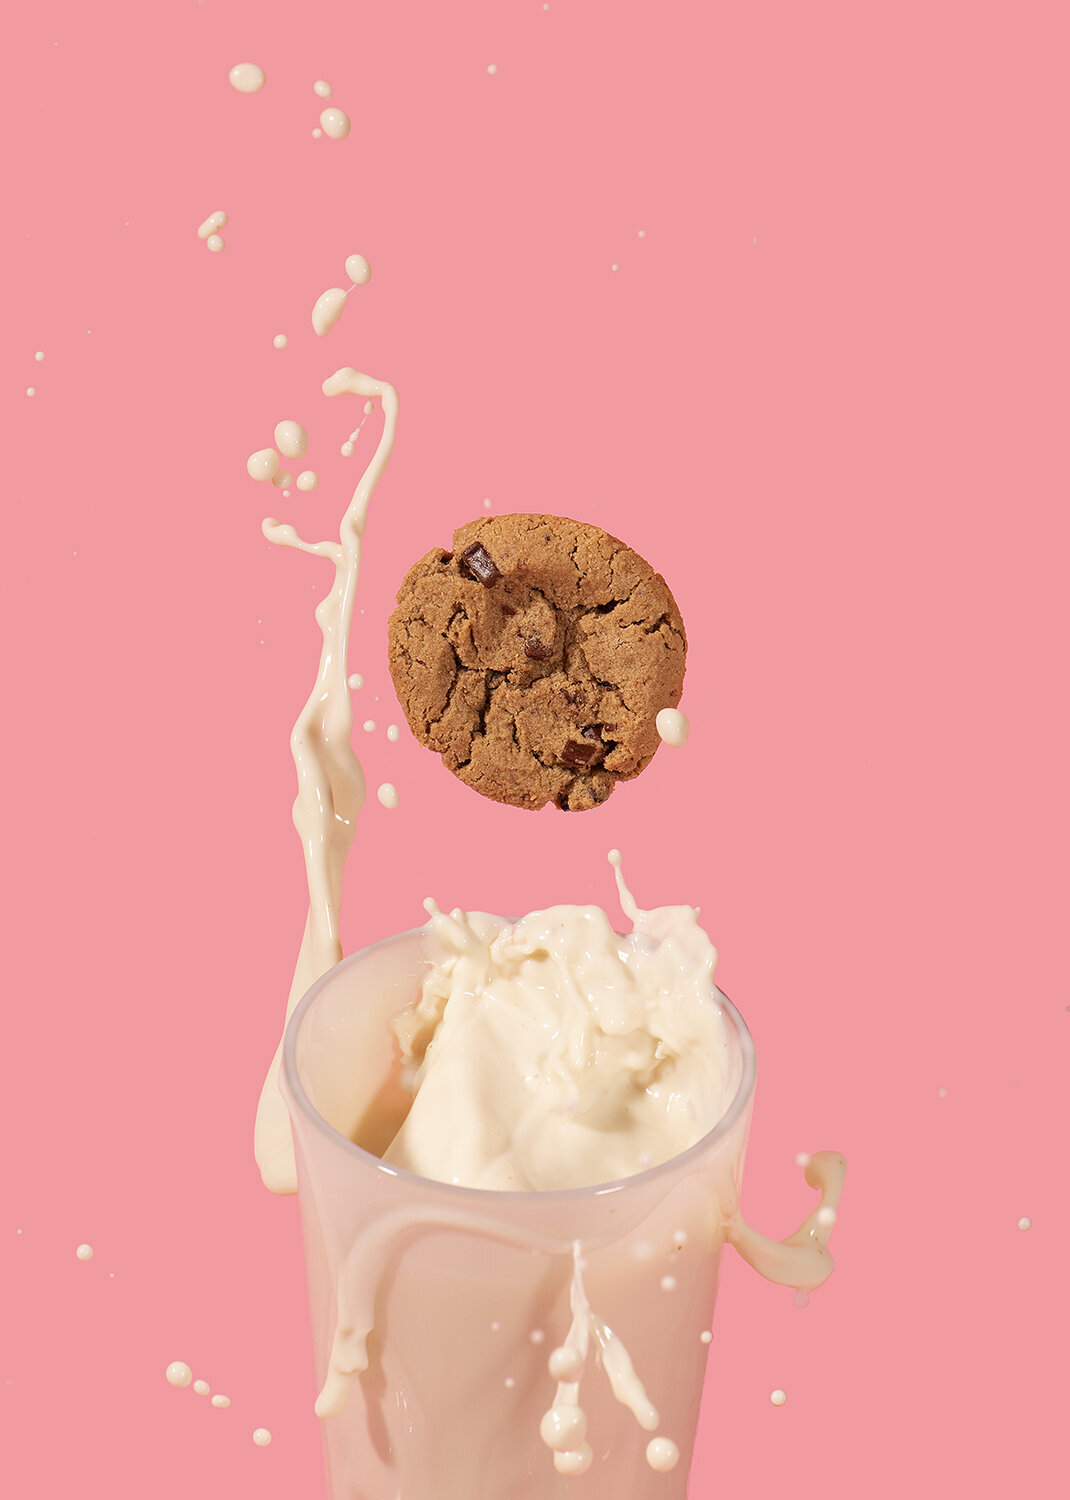 sweet lorens cookies and oatly milk splash on pink background